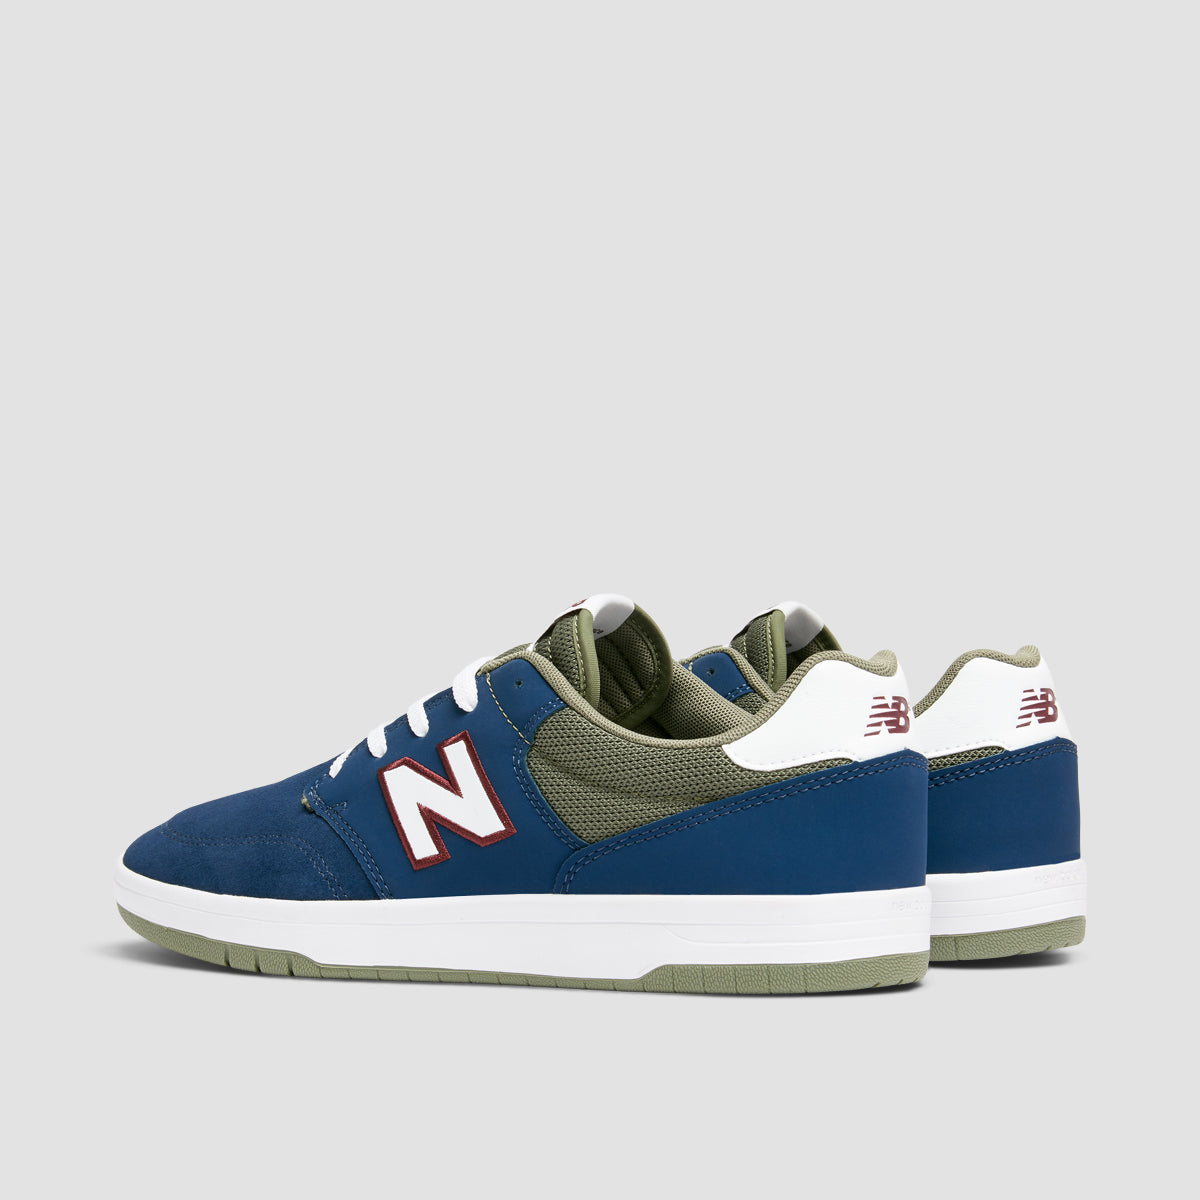 New Balance Numeric 425 Shoes - NB Navy/White